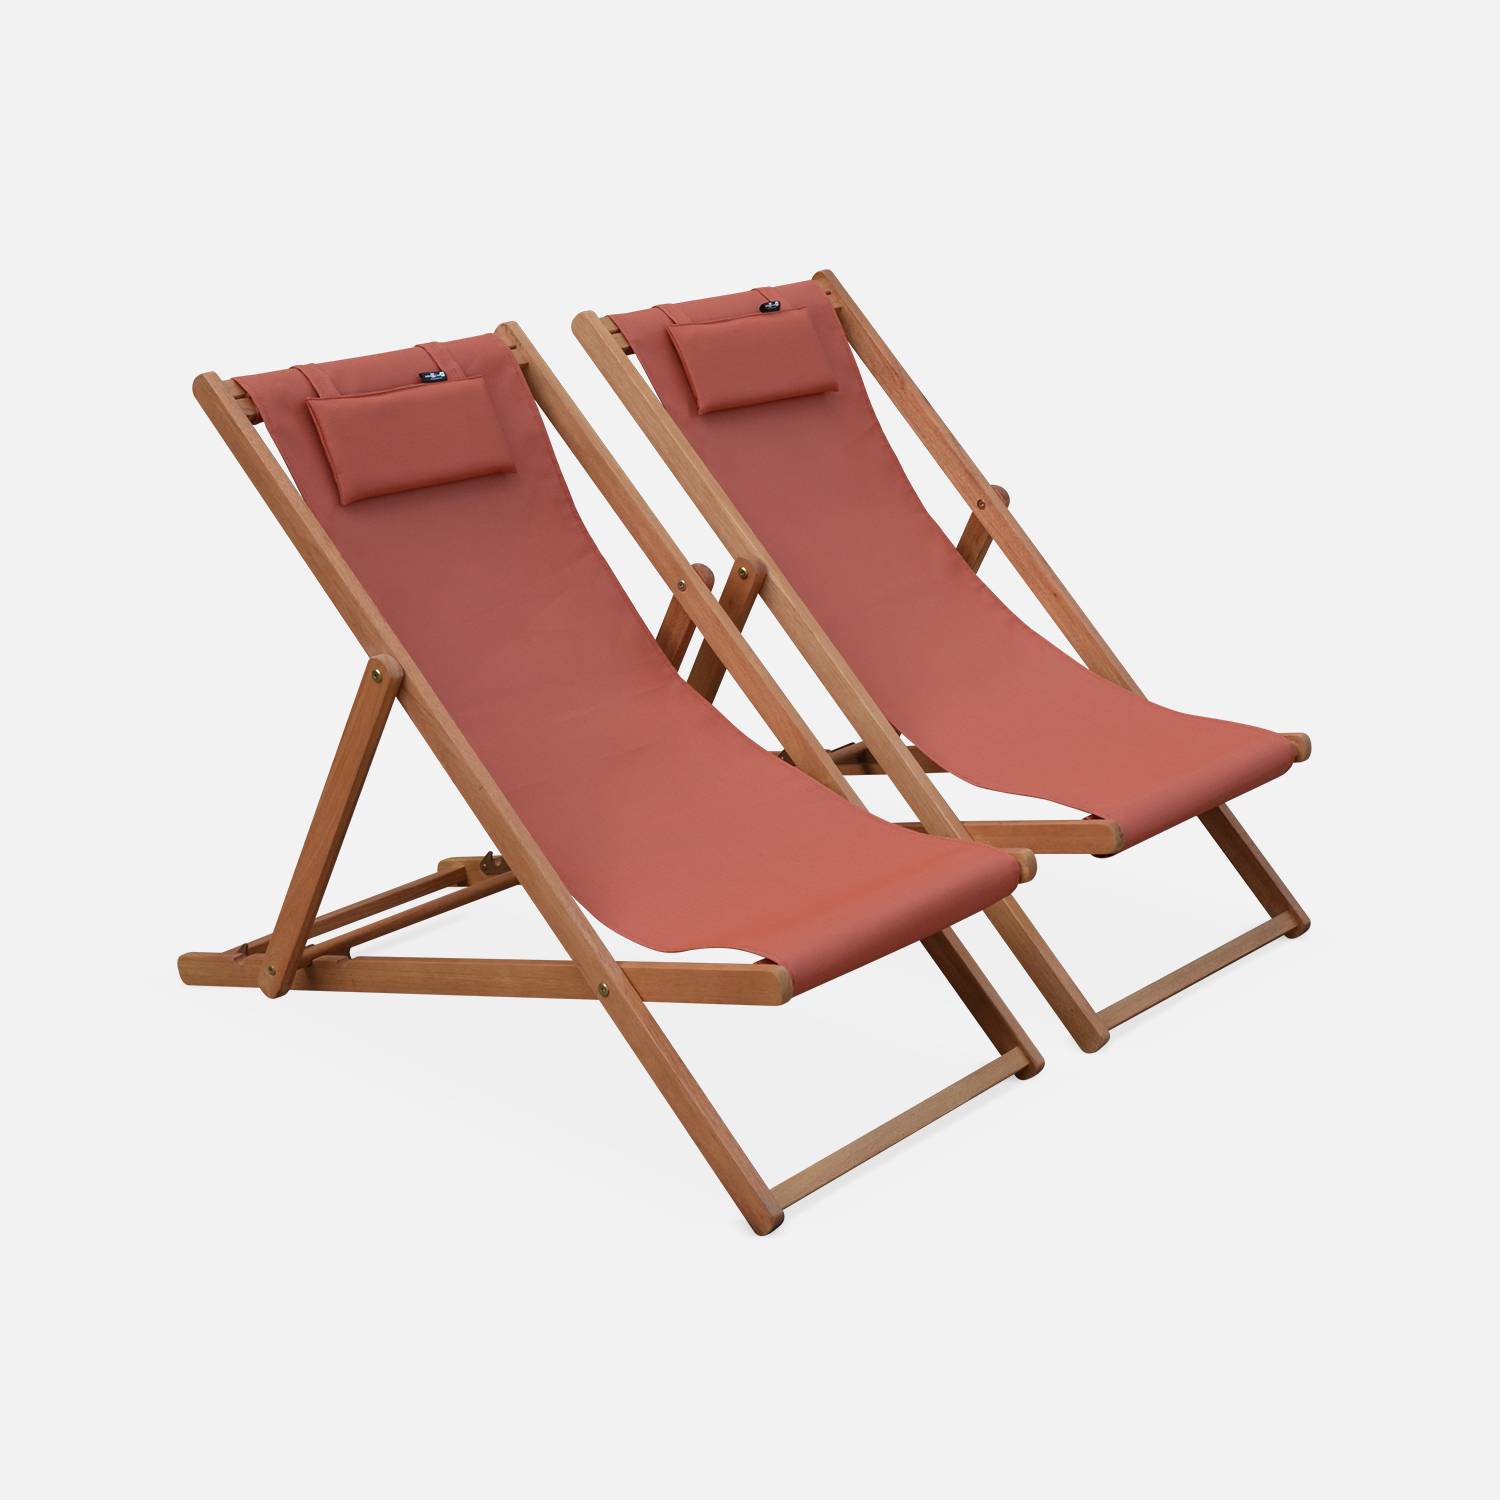 Pair of pre-oiled FSC eucalyptus deck chairs with headrest cushions - Creus - Wood/Terracotta Photo2